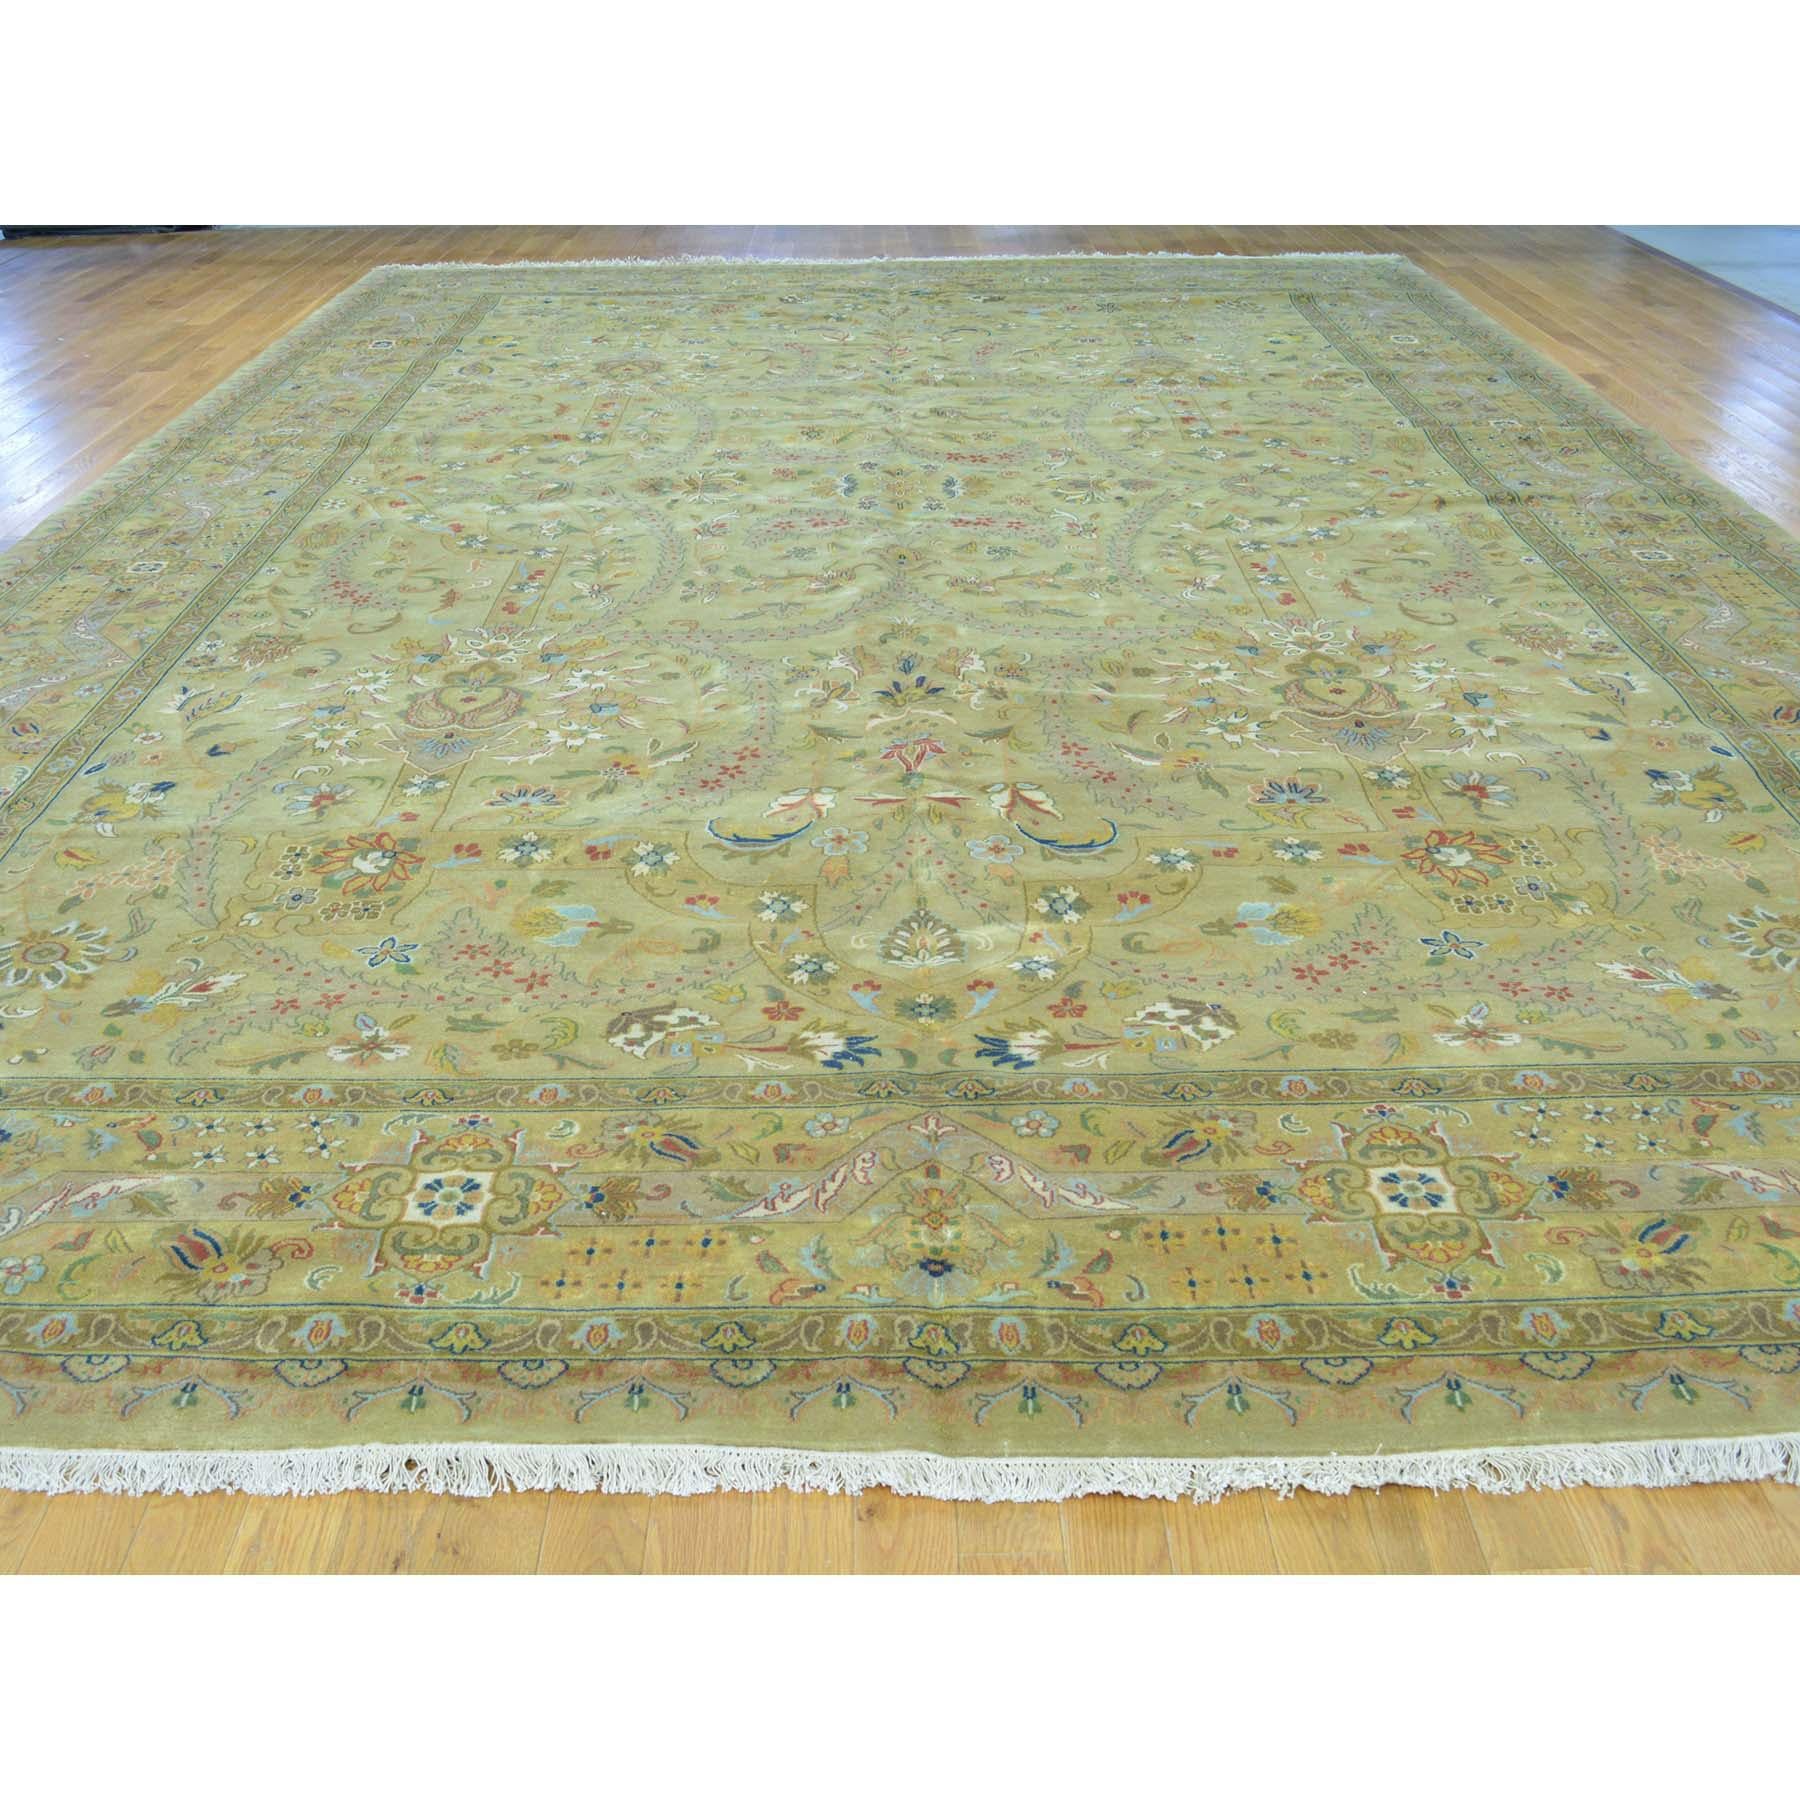 Tabriz Revival 300 KPSI oversize hand knotted Oriental rug. Measures: 11'8